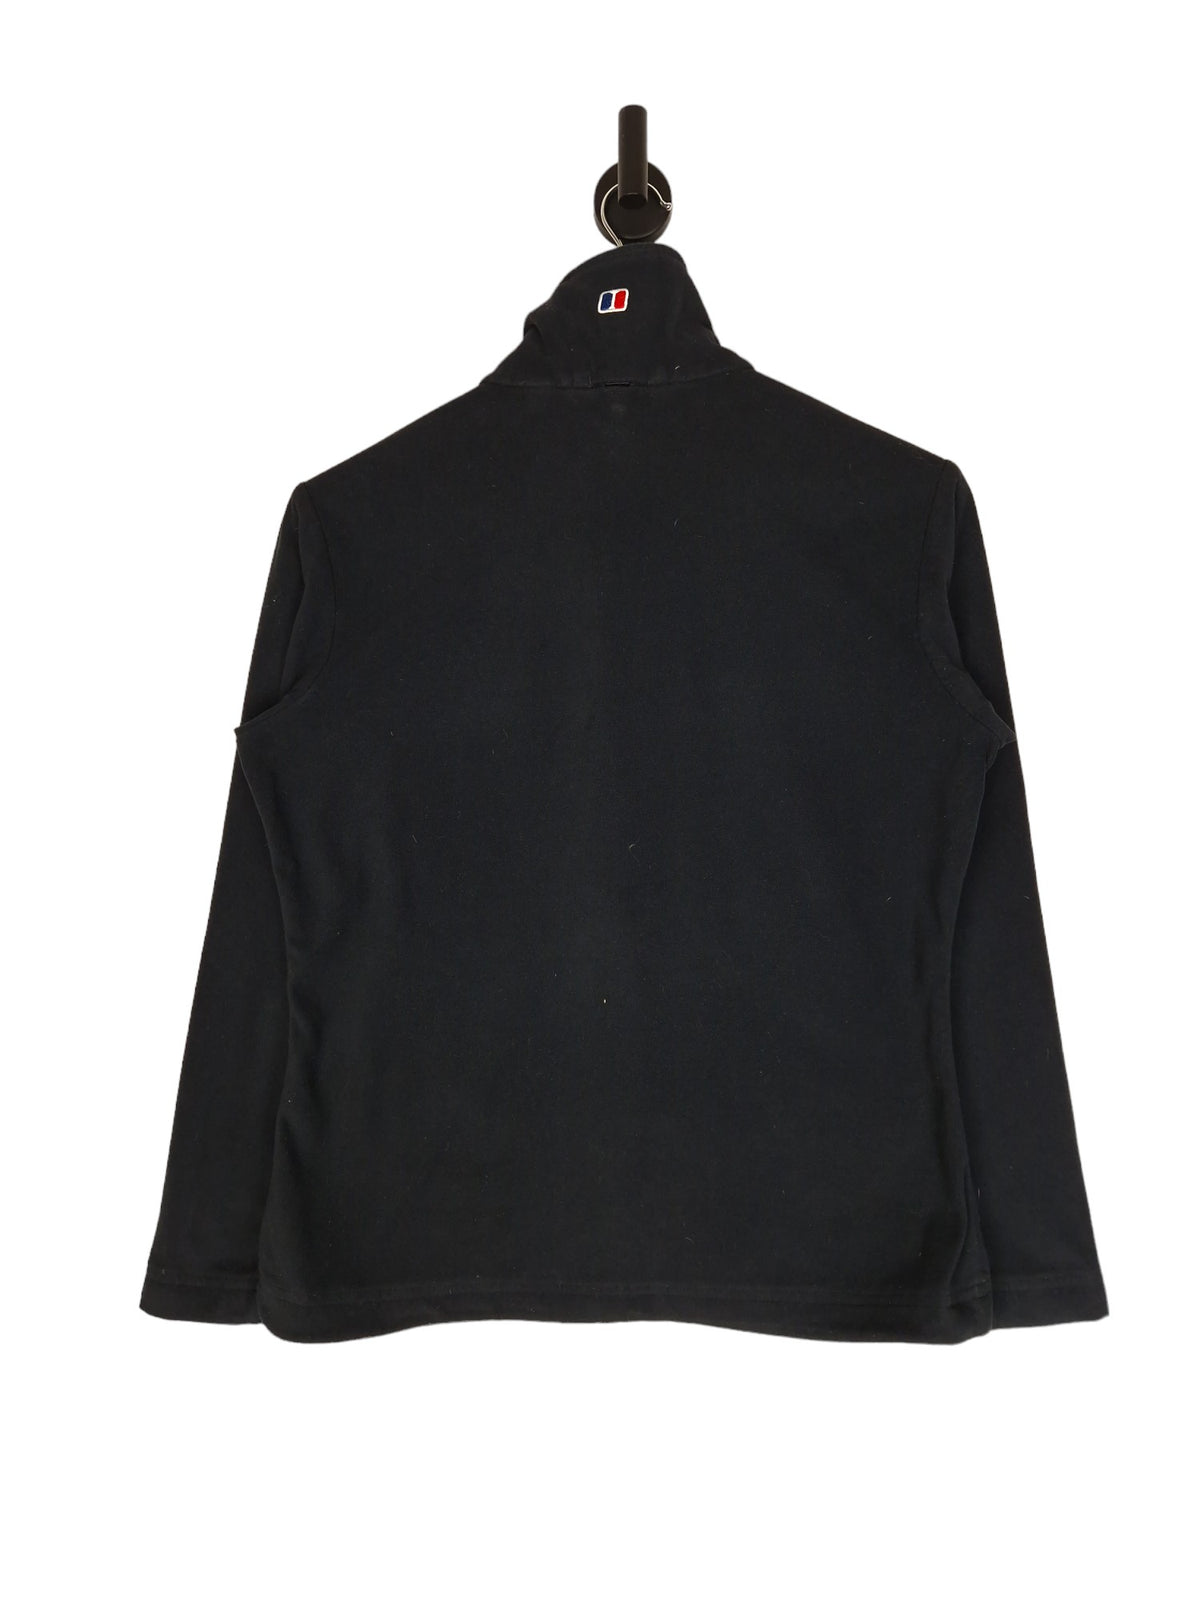 Berghaus Fleece Jacket - Size UK 12